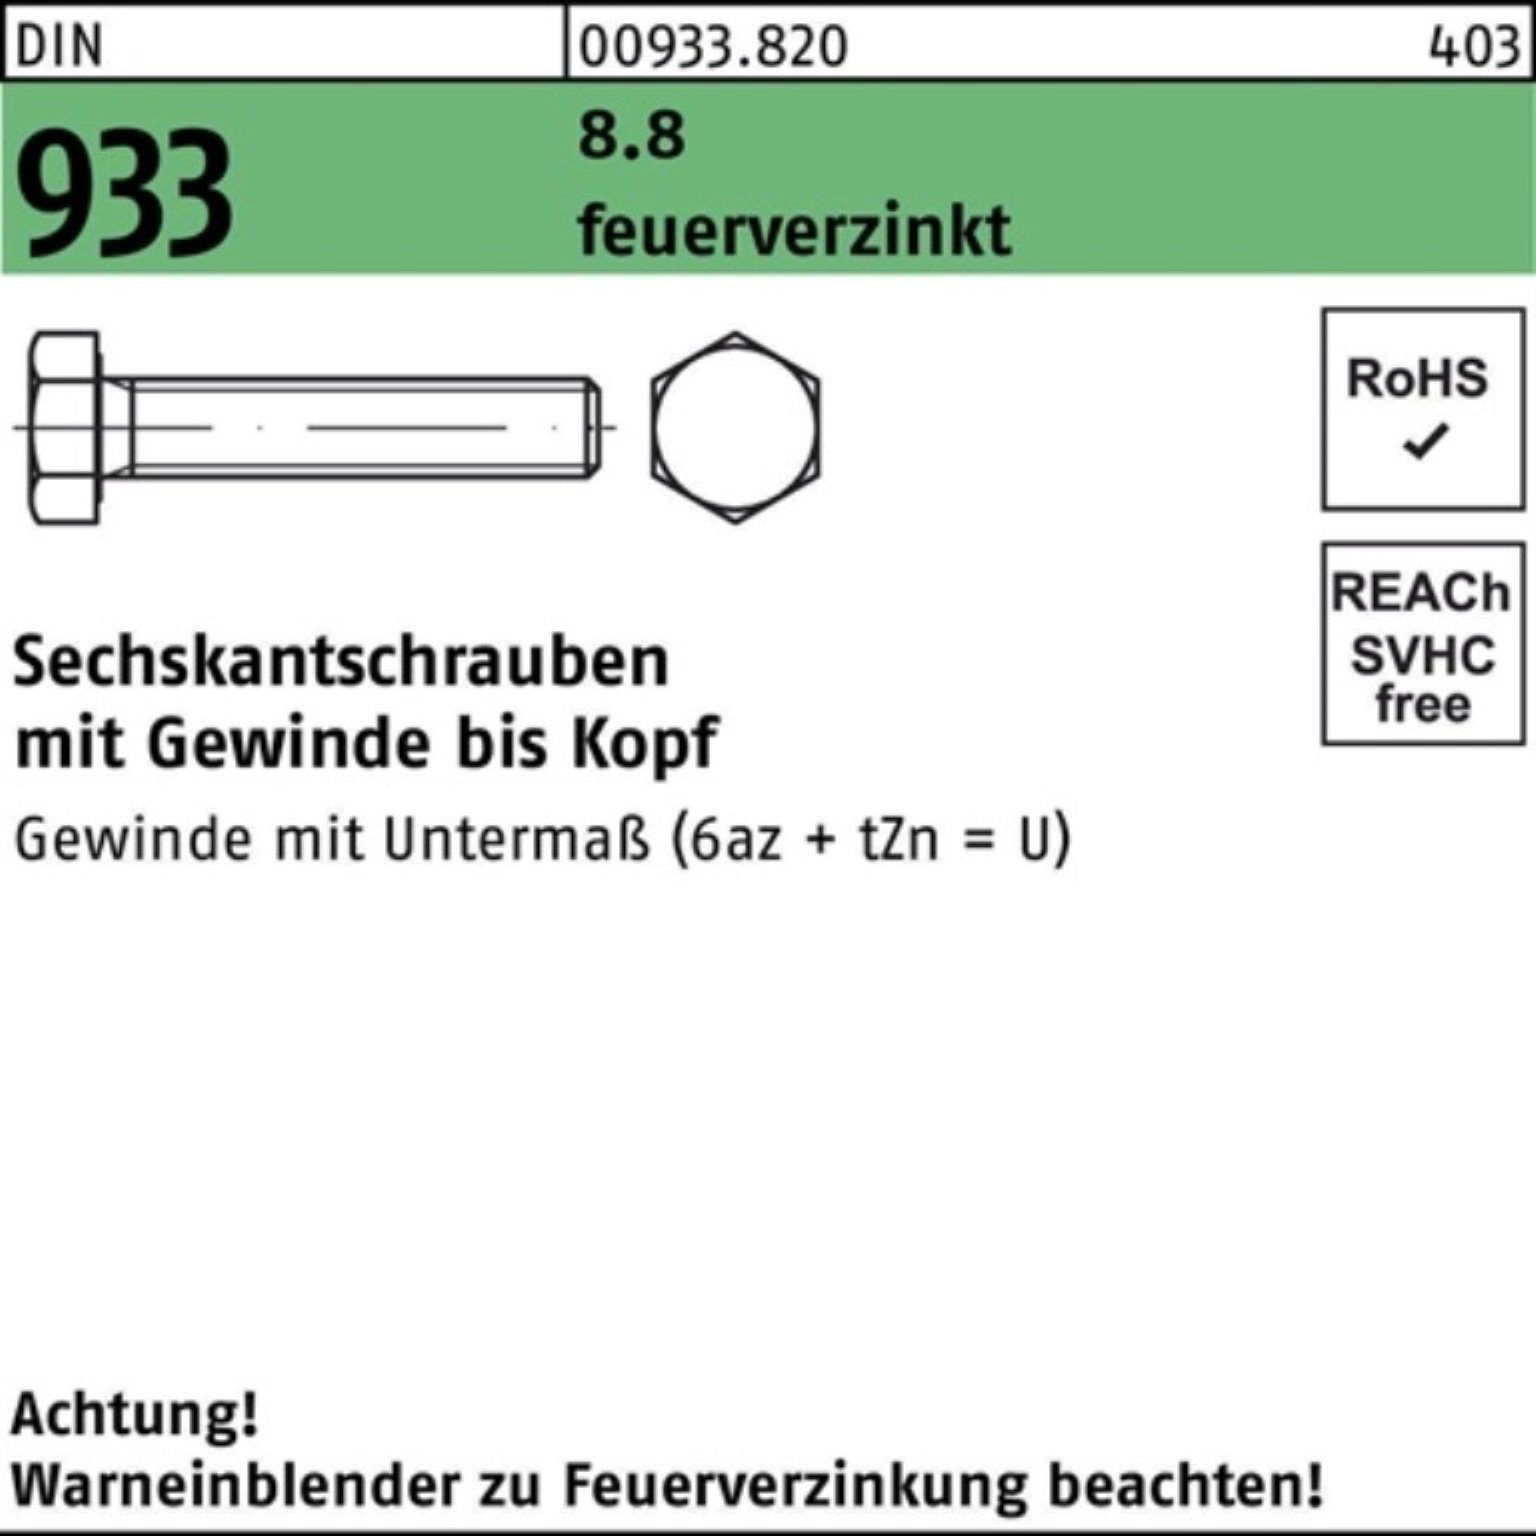 Reyher Sechskantschraube M12x VG 8.8 DIN Pack feuerverz. Stü 933 90 50 Sechskantschraube 100er